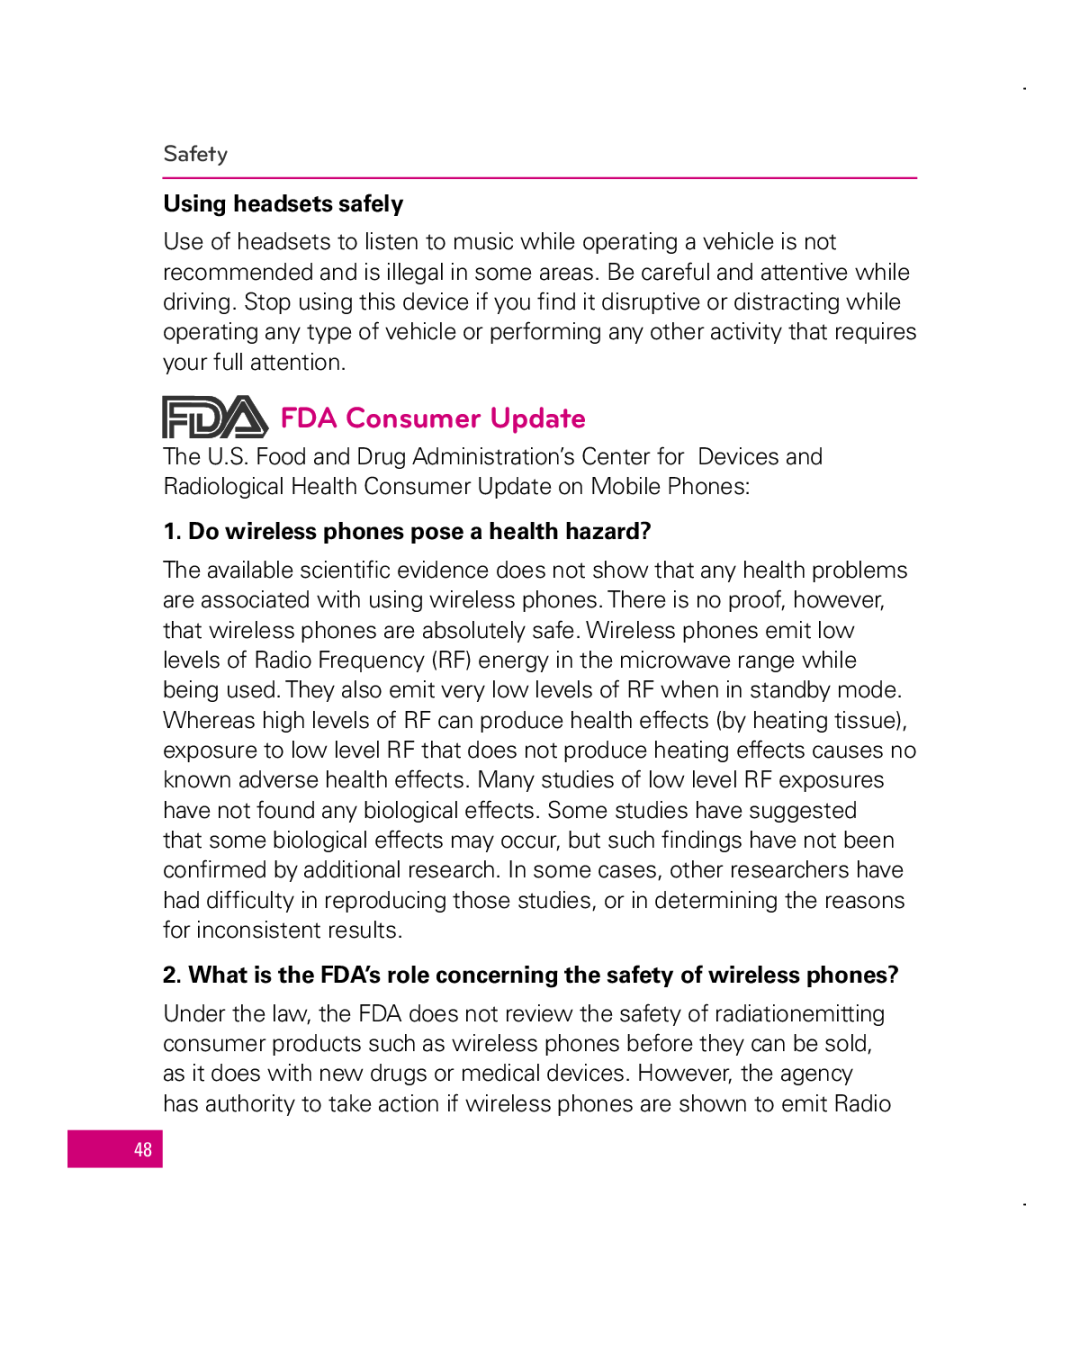 LG Electronics MFL67006501(1.0), Apex FDA Consumer Update, Using headsets safely, Do wireless phones pose a health hazard? 